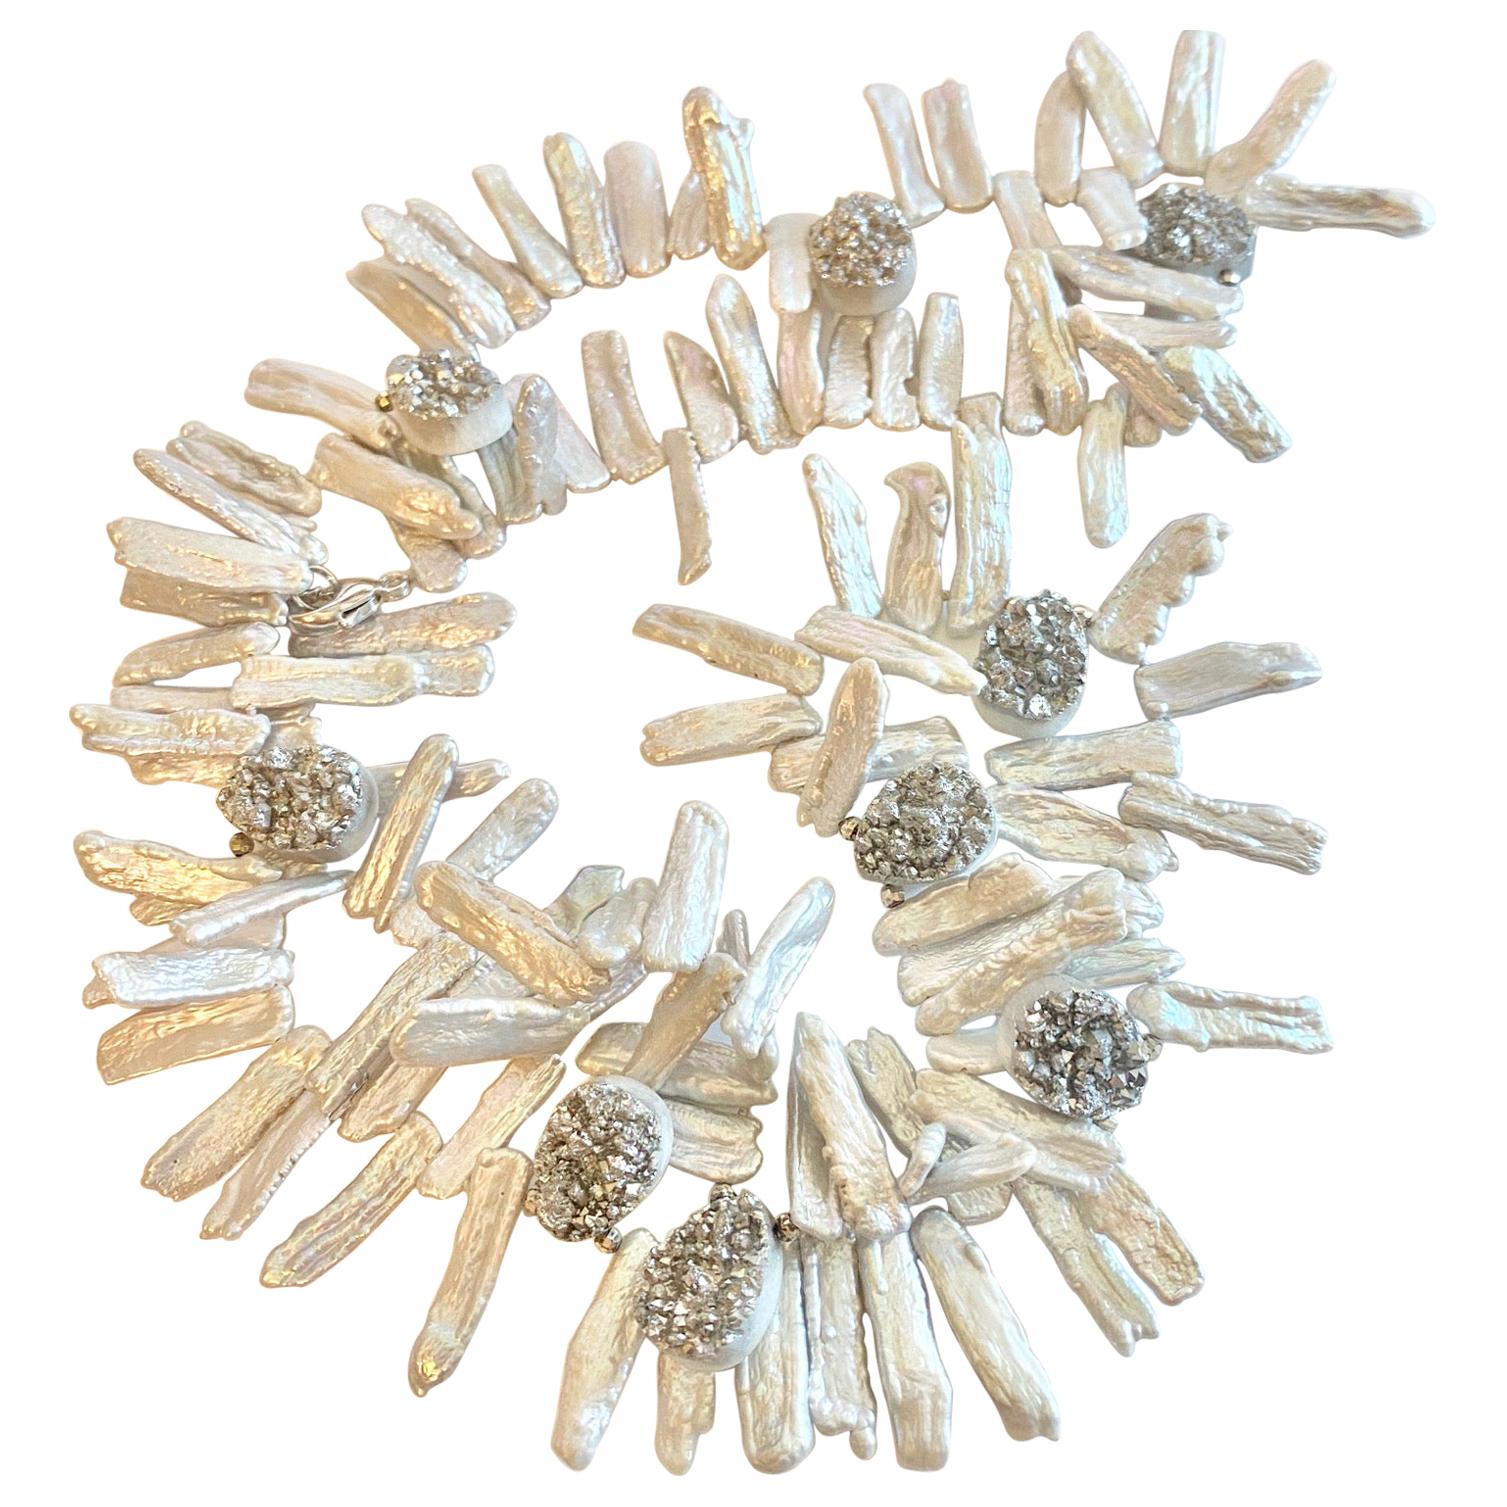 Genuine Baroque Pearls and Drusy Quartz Strung Necklace, Original Cultured Pearl For Sale